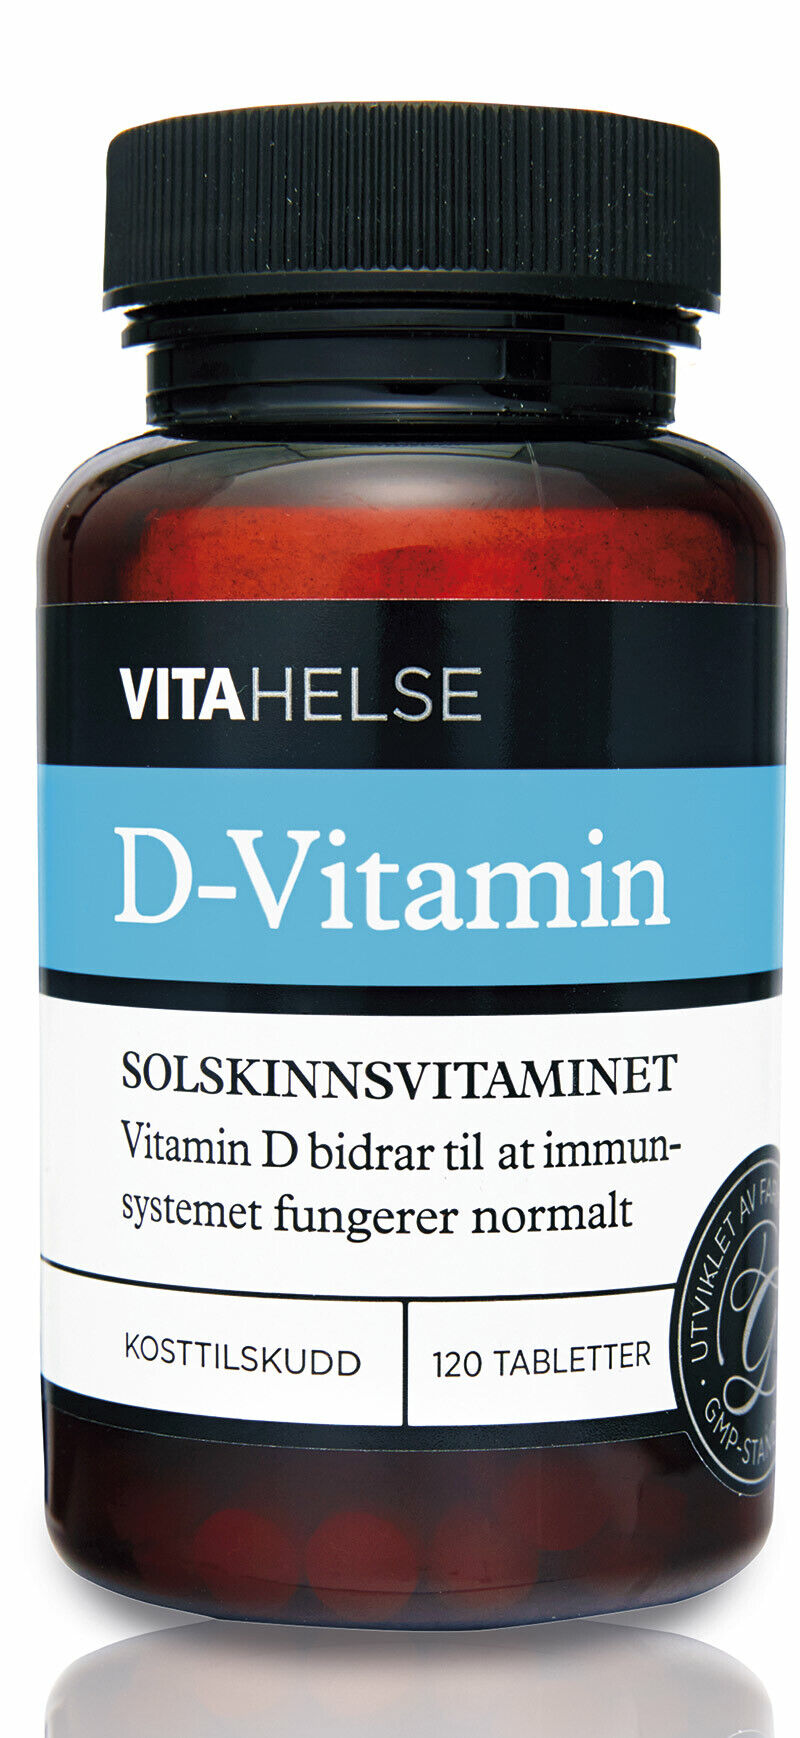 Vita Helse D-Vitamin 120stk